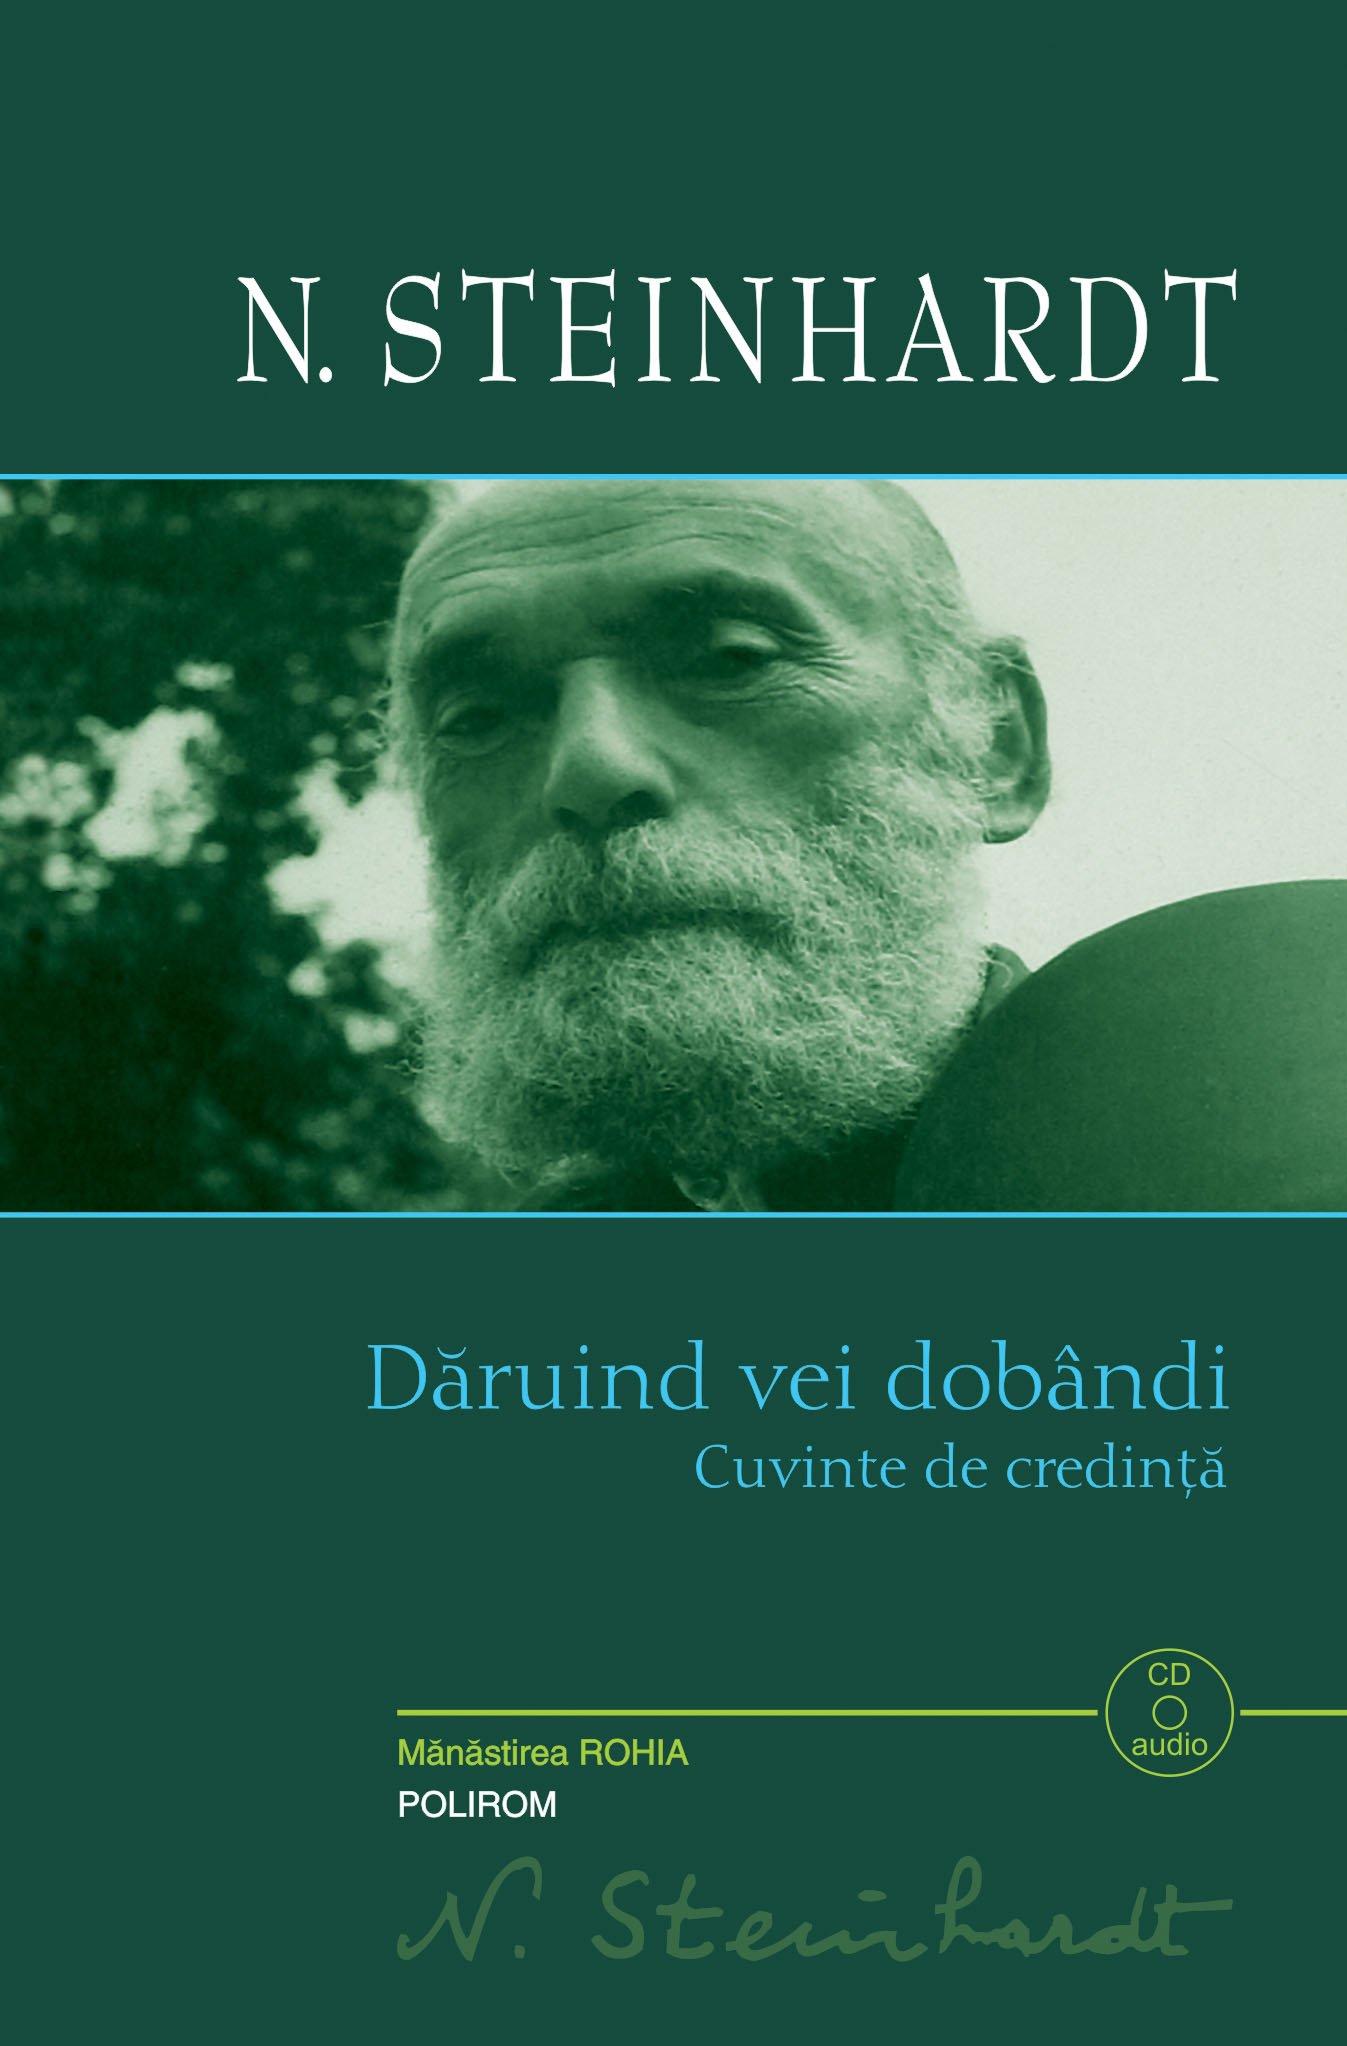 eBook Daruind vei dobandi - N. Steinhardt